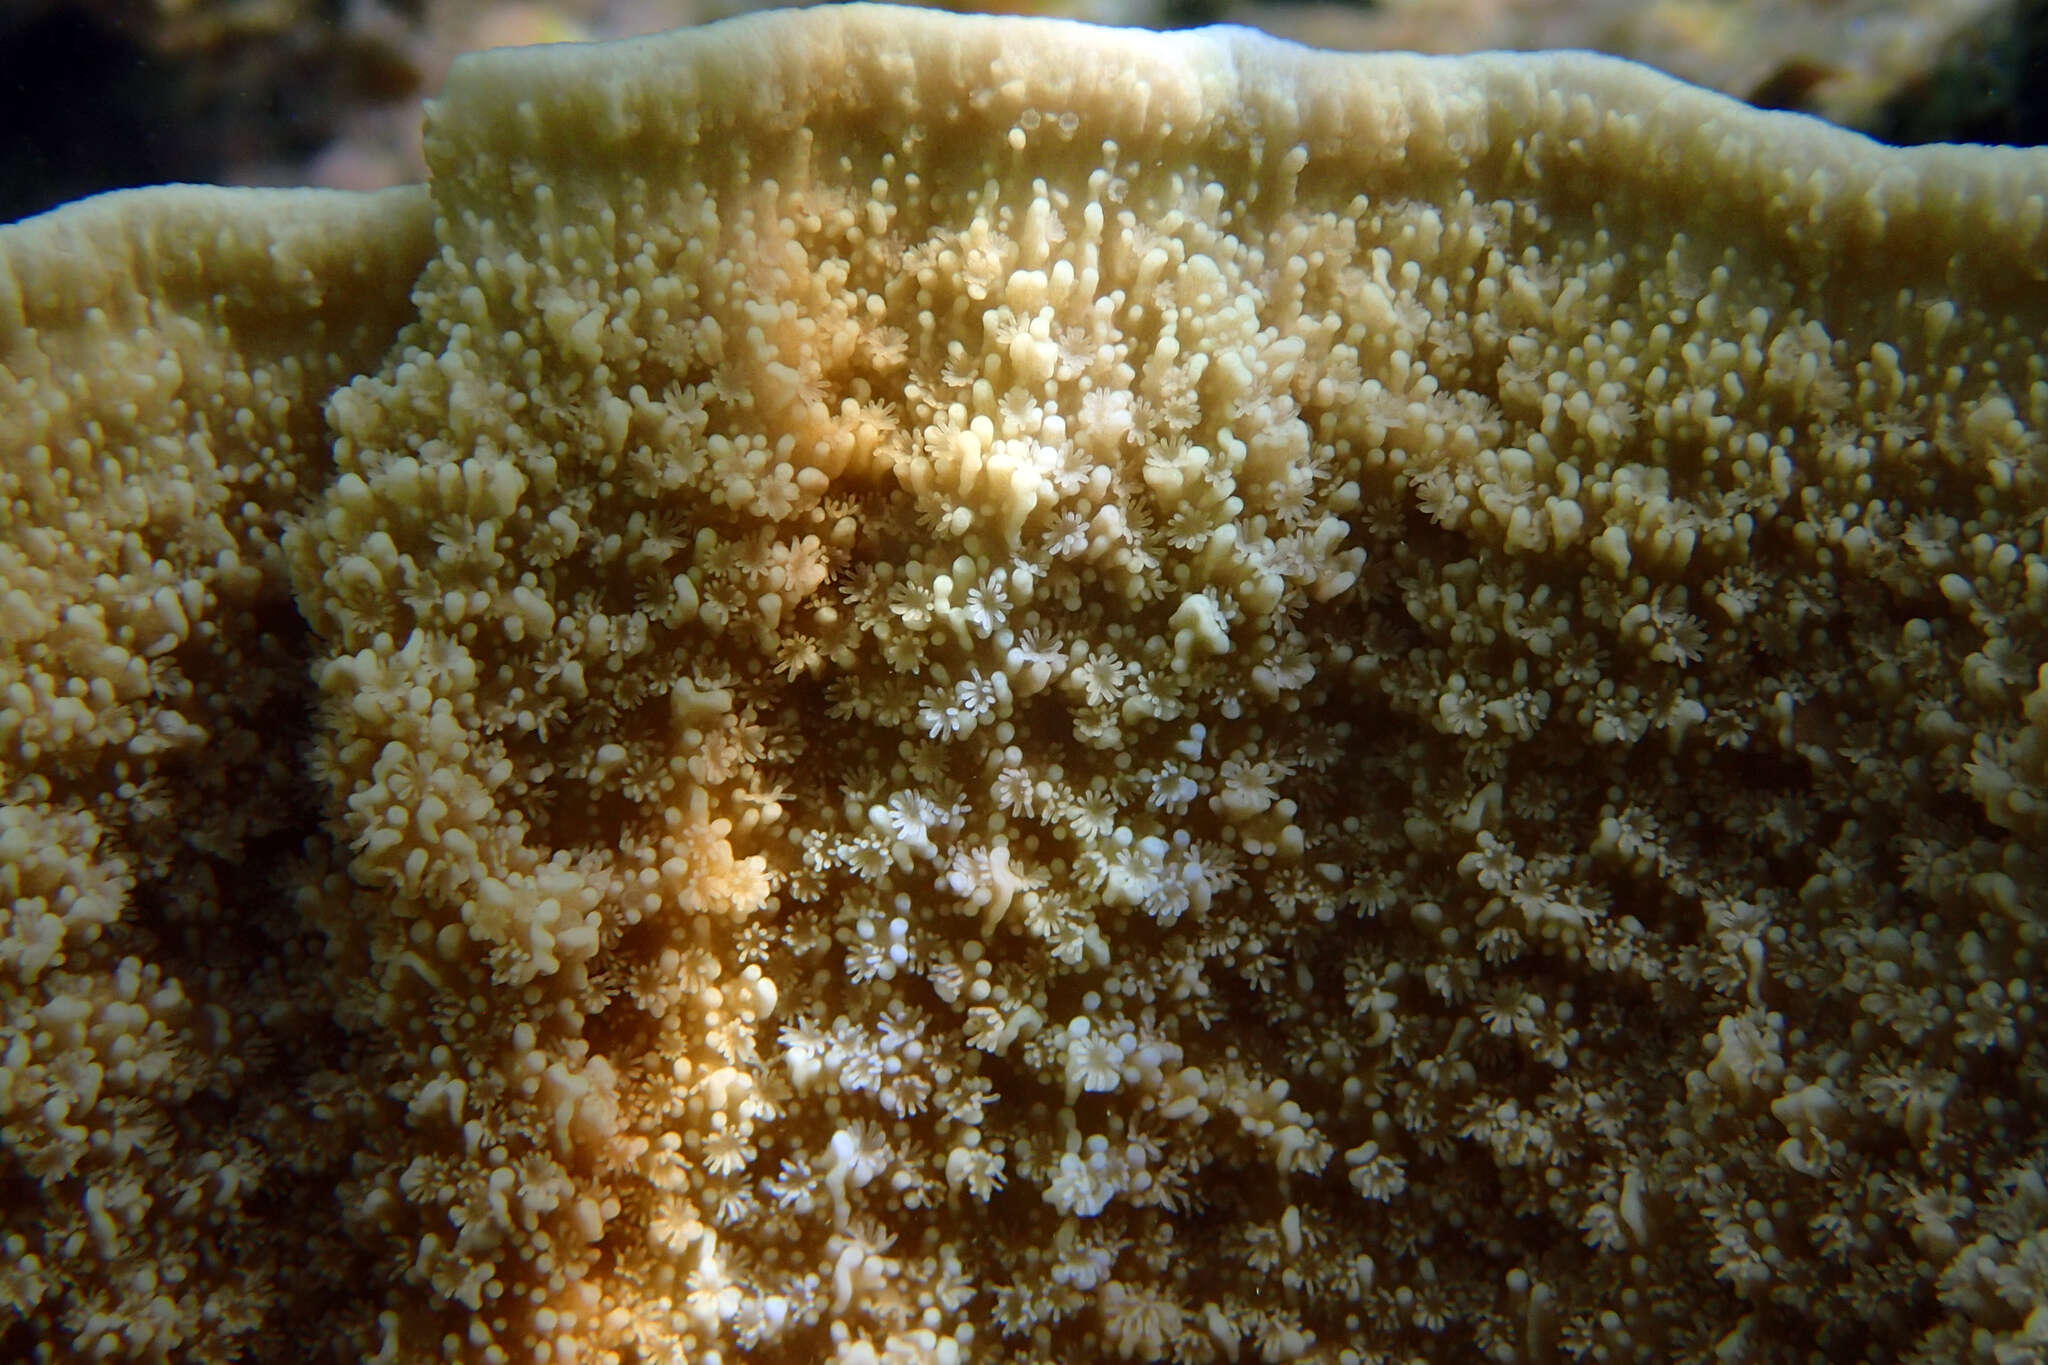 Image of Encrusting pore coral